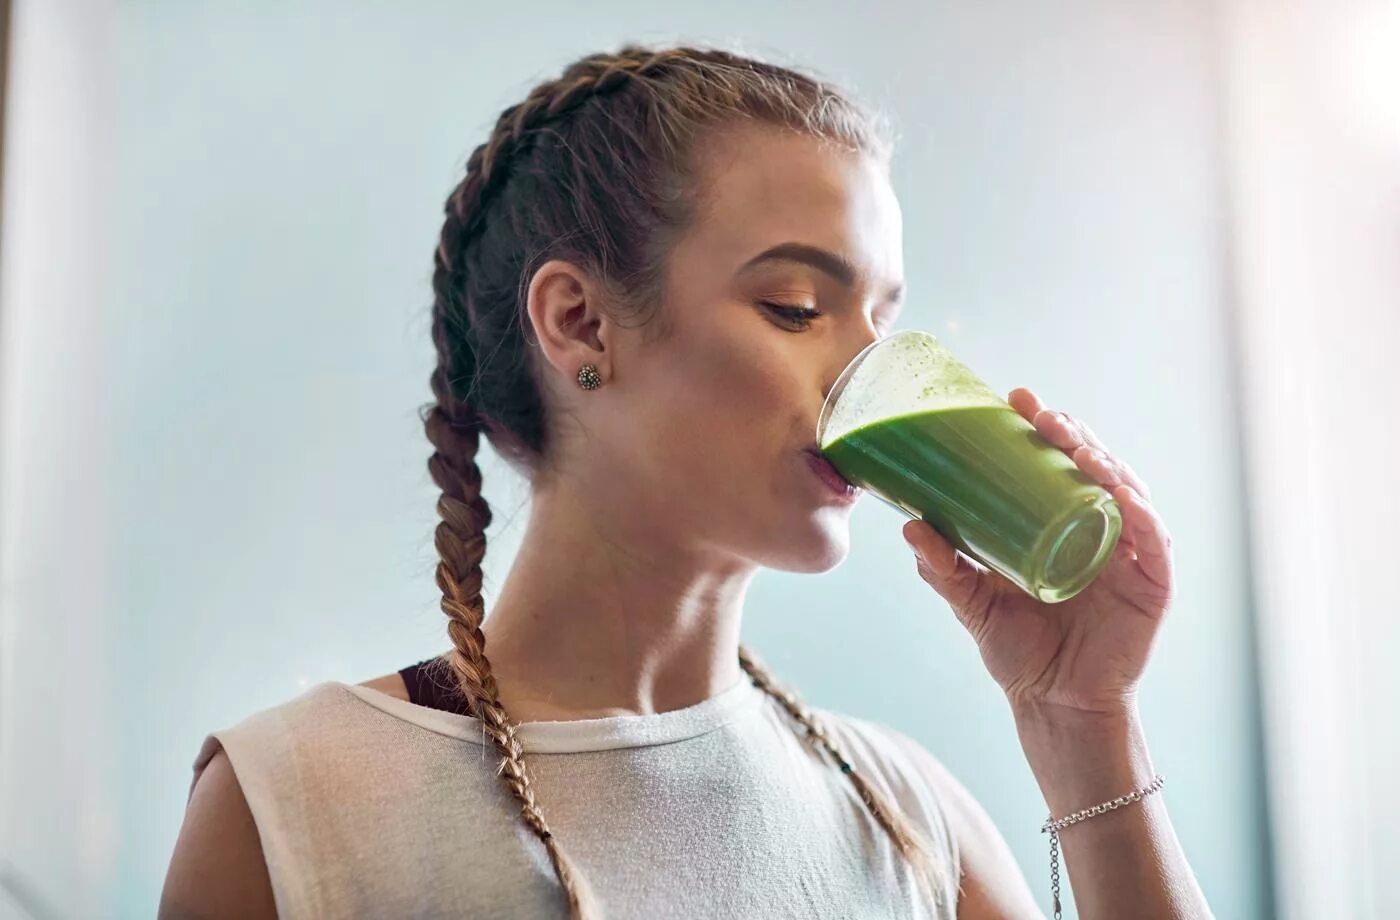 Смузи человек. Пьет смузи. Девушка пьет смузи. Девушка пьет зеленый смузи. Пьет зеленый коктейль.